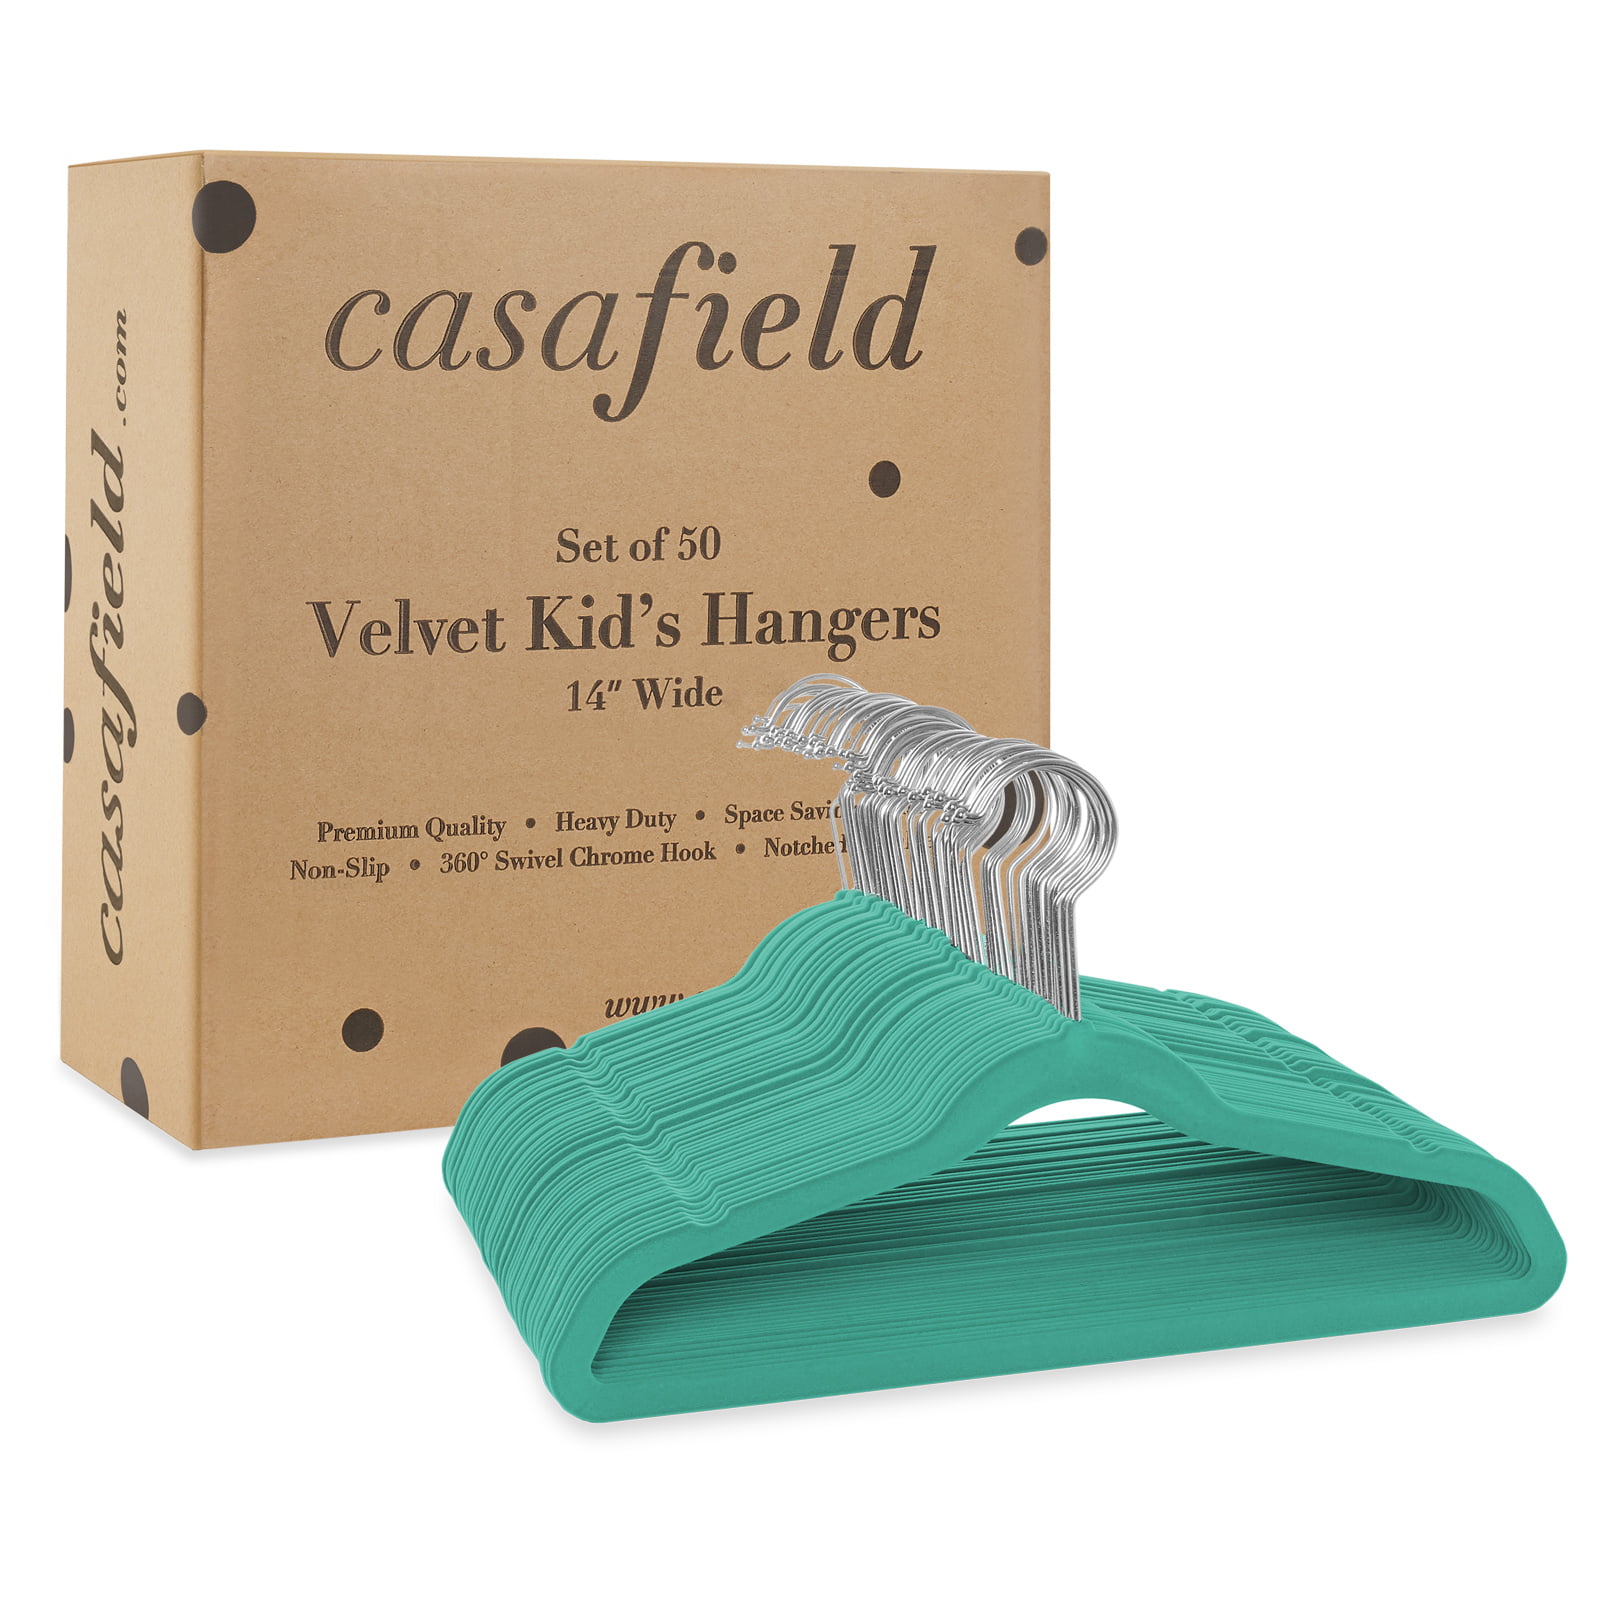 100 Velvet 11 Baby Hangers by Casafield - Bed Bath & Beyond - 37565450